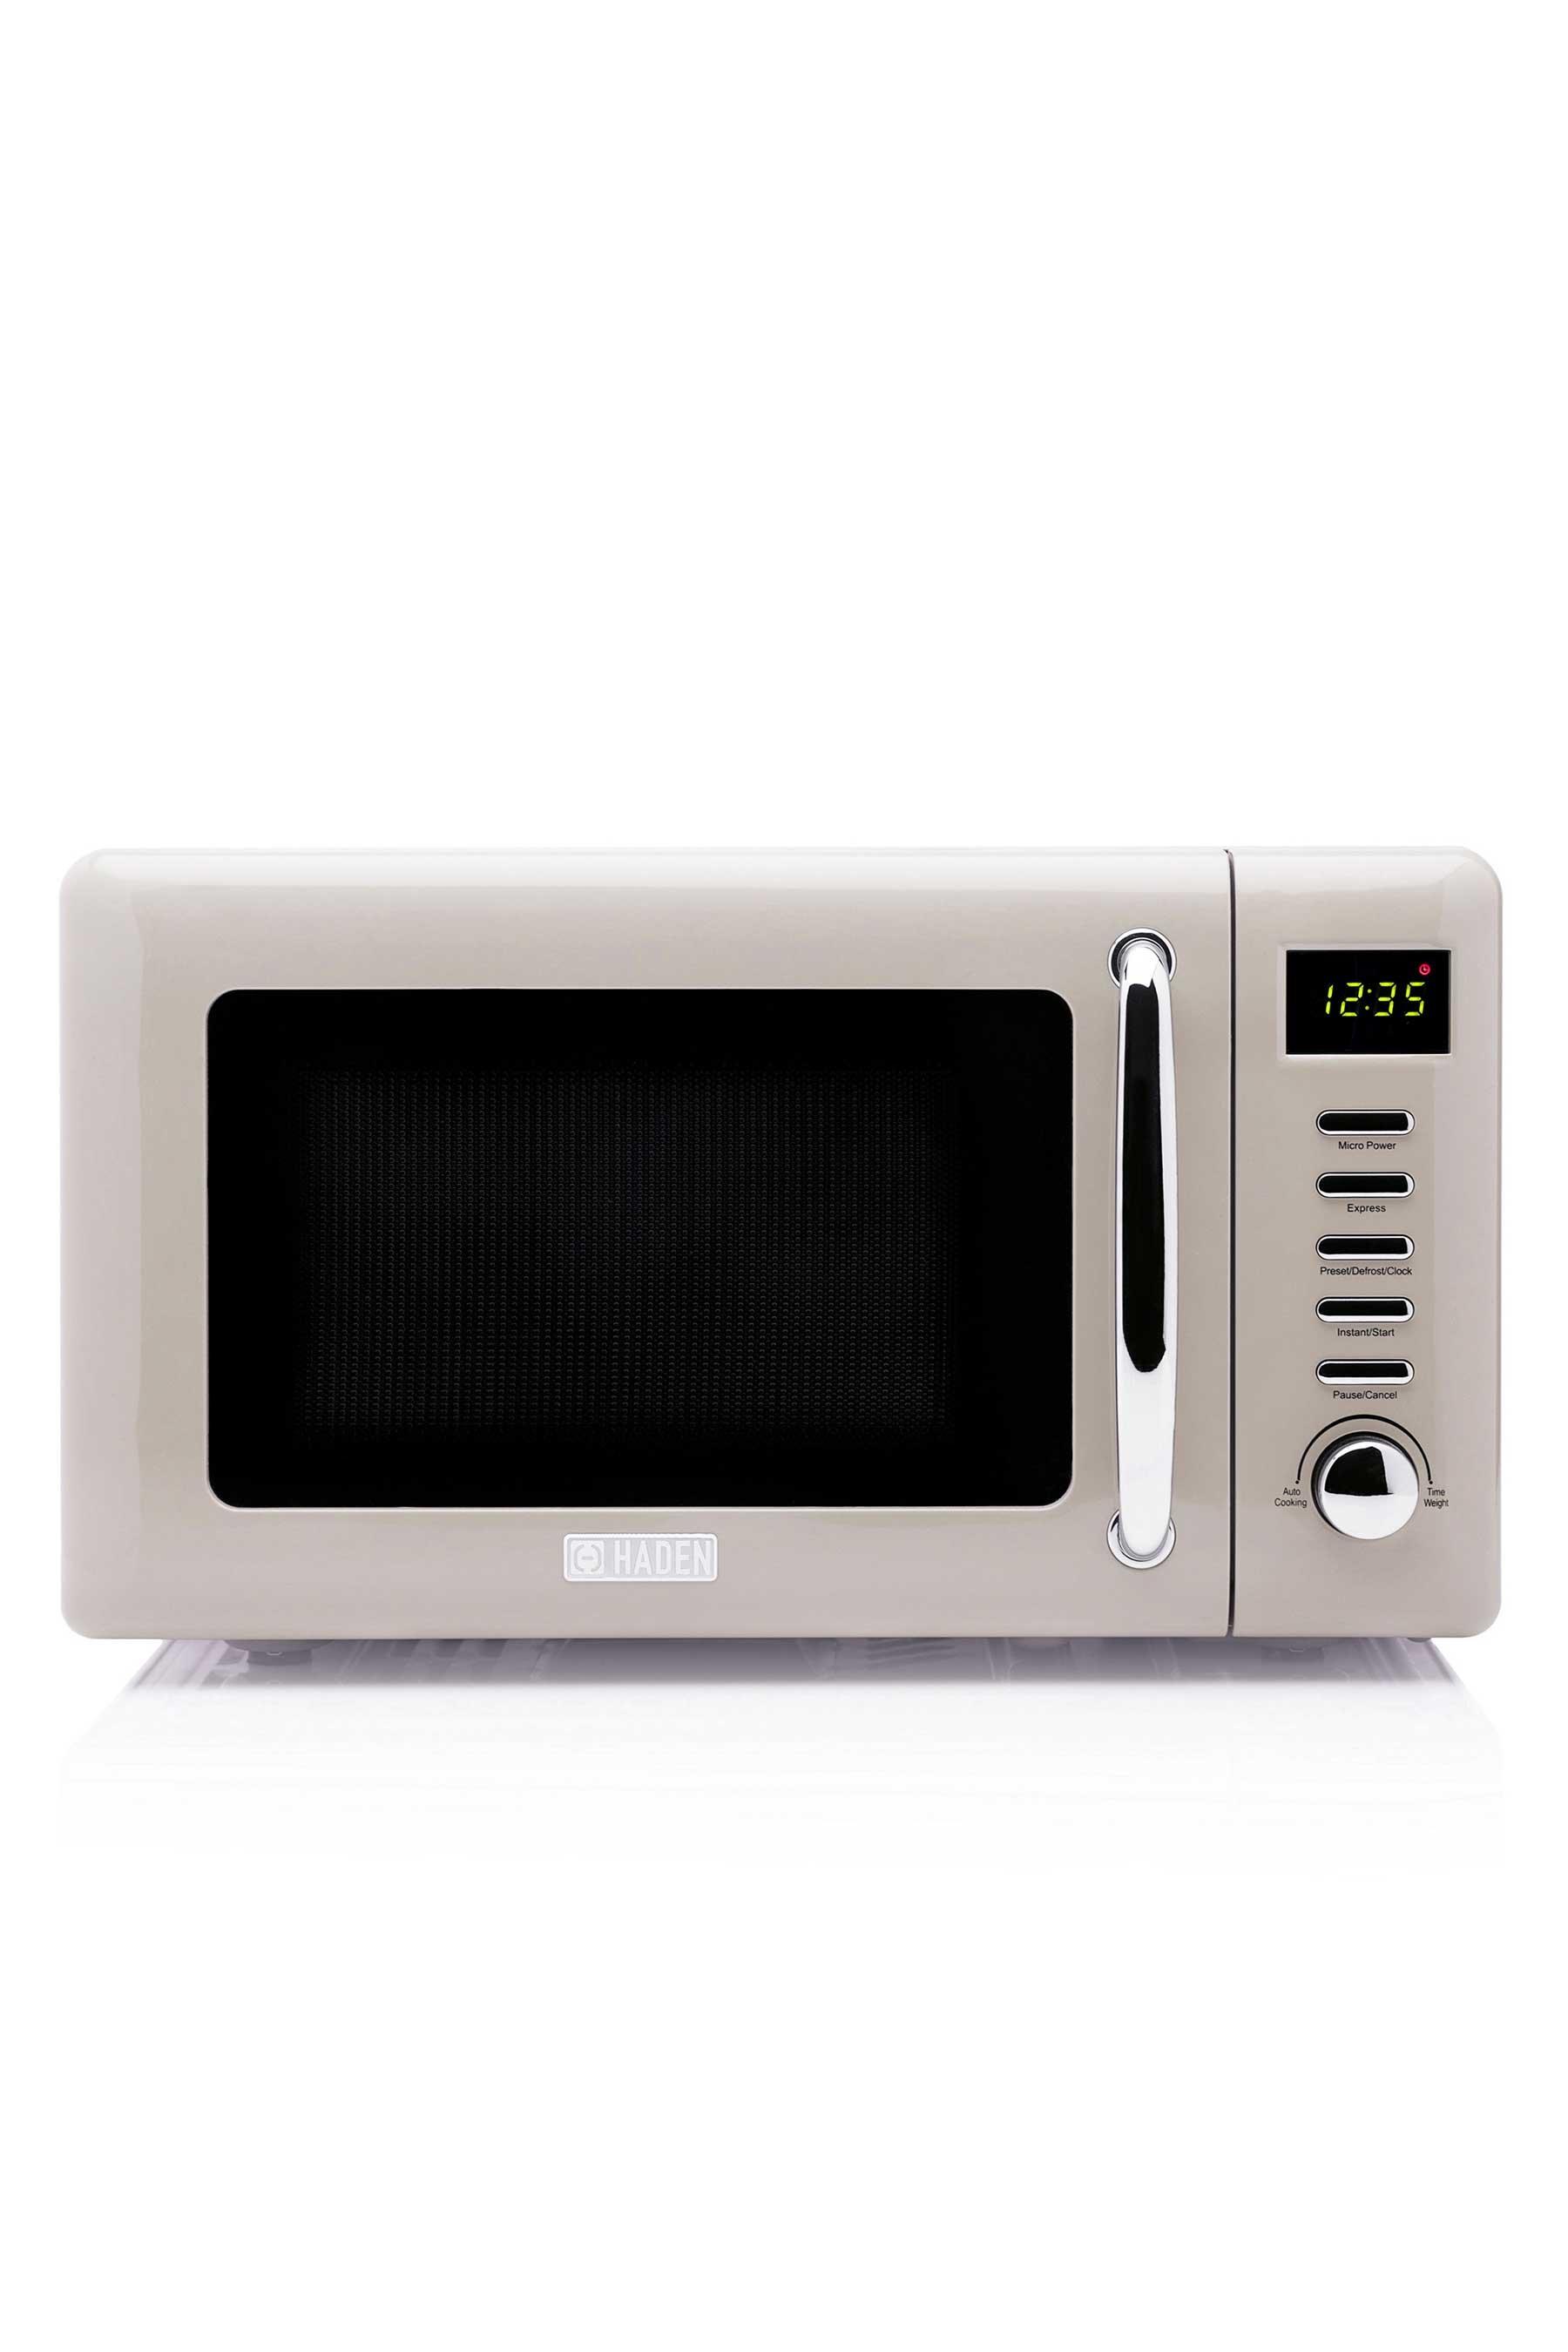 HADEN Dorchester Matte Black Compact Microwave + Reviews